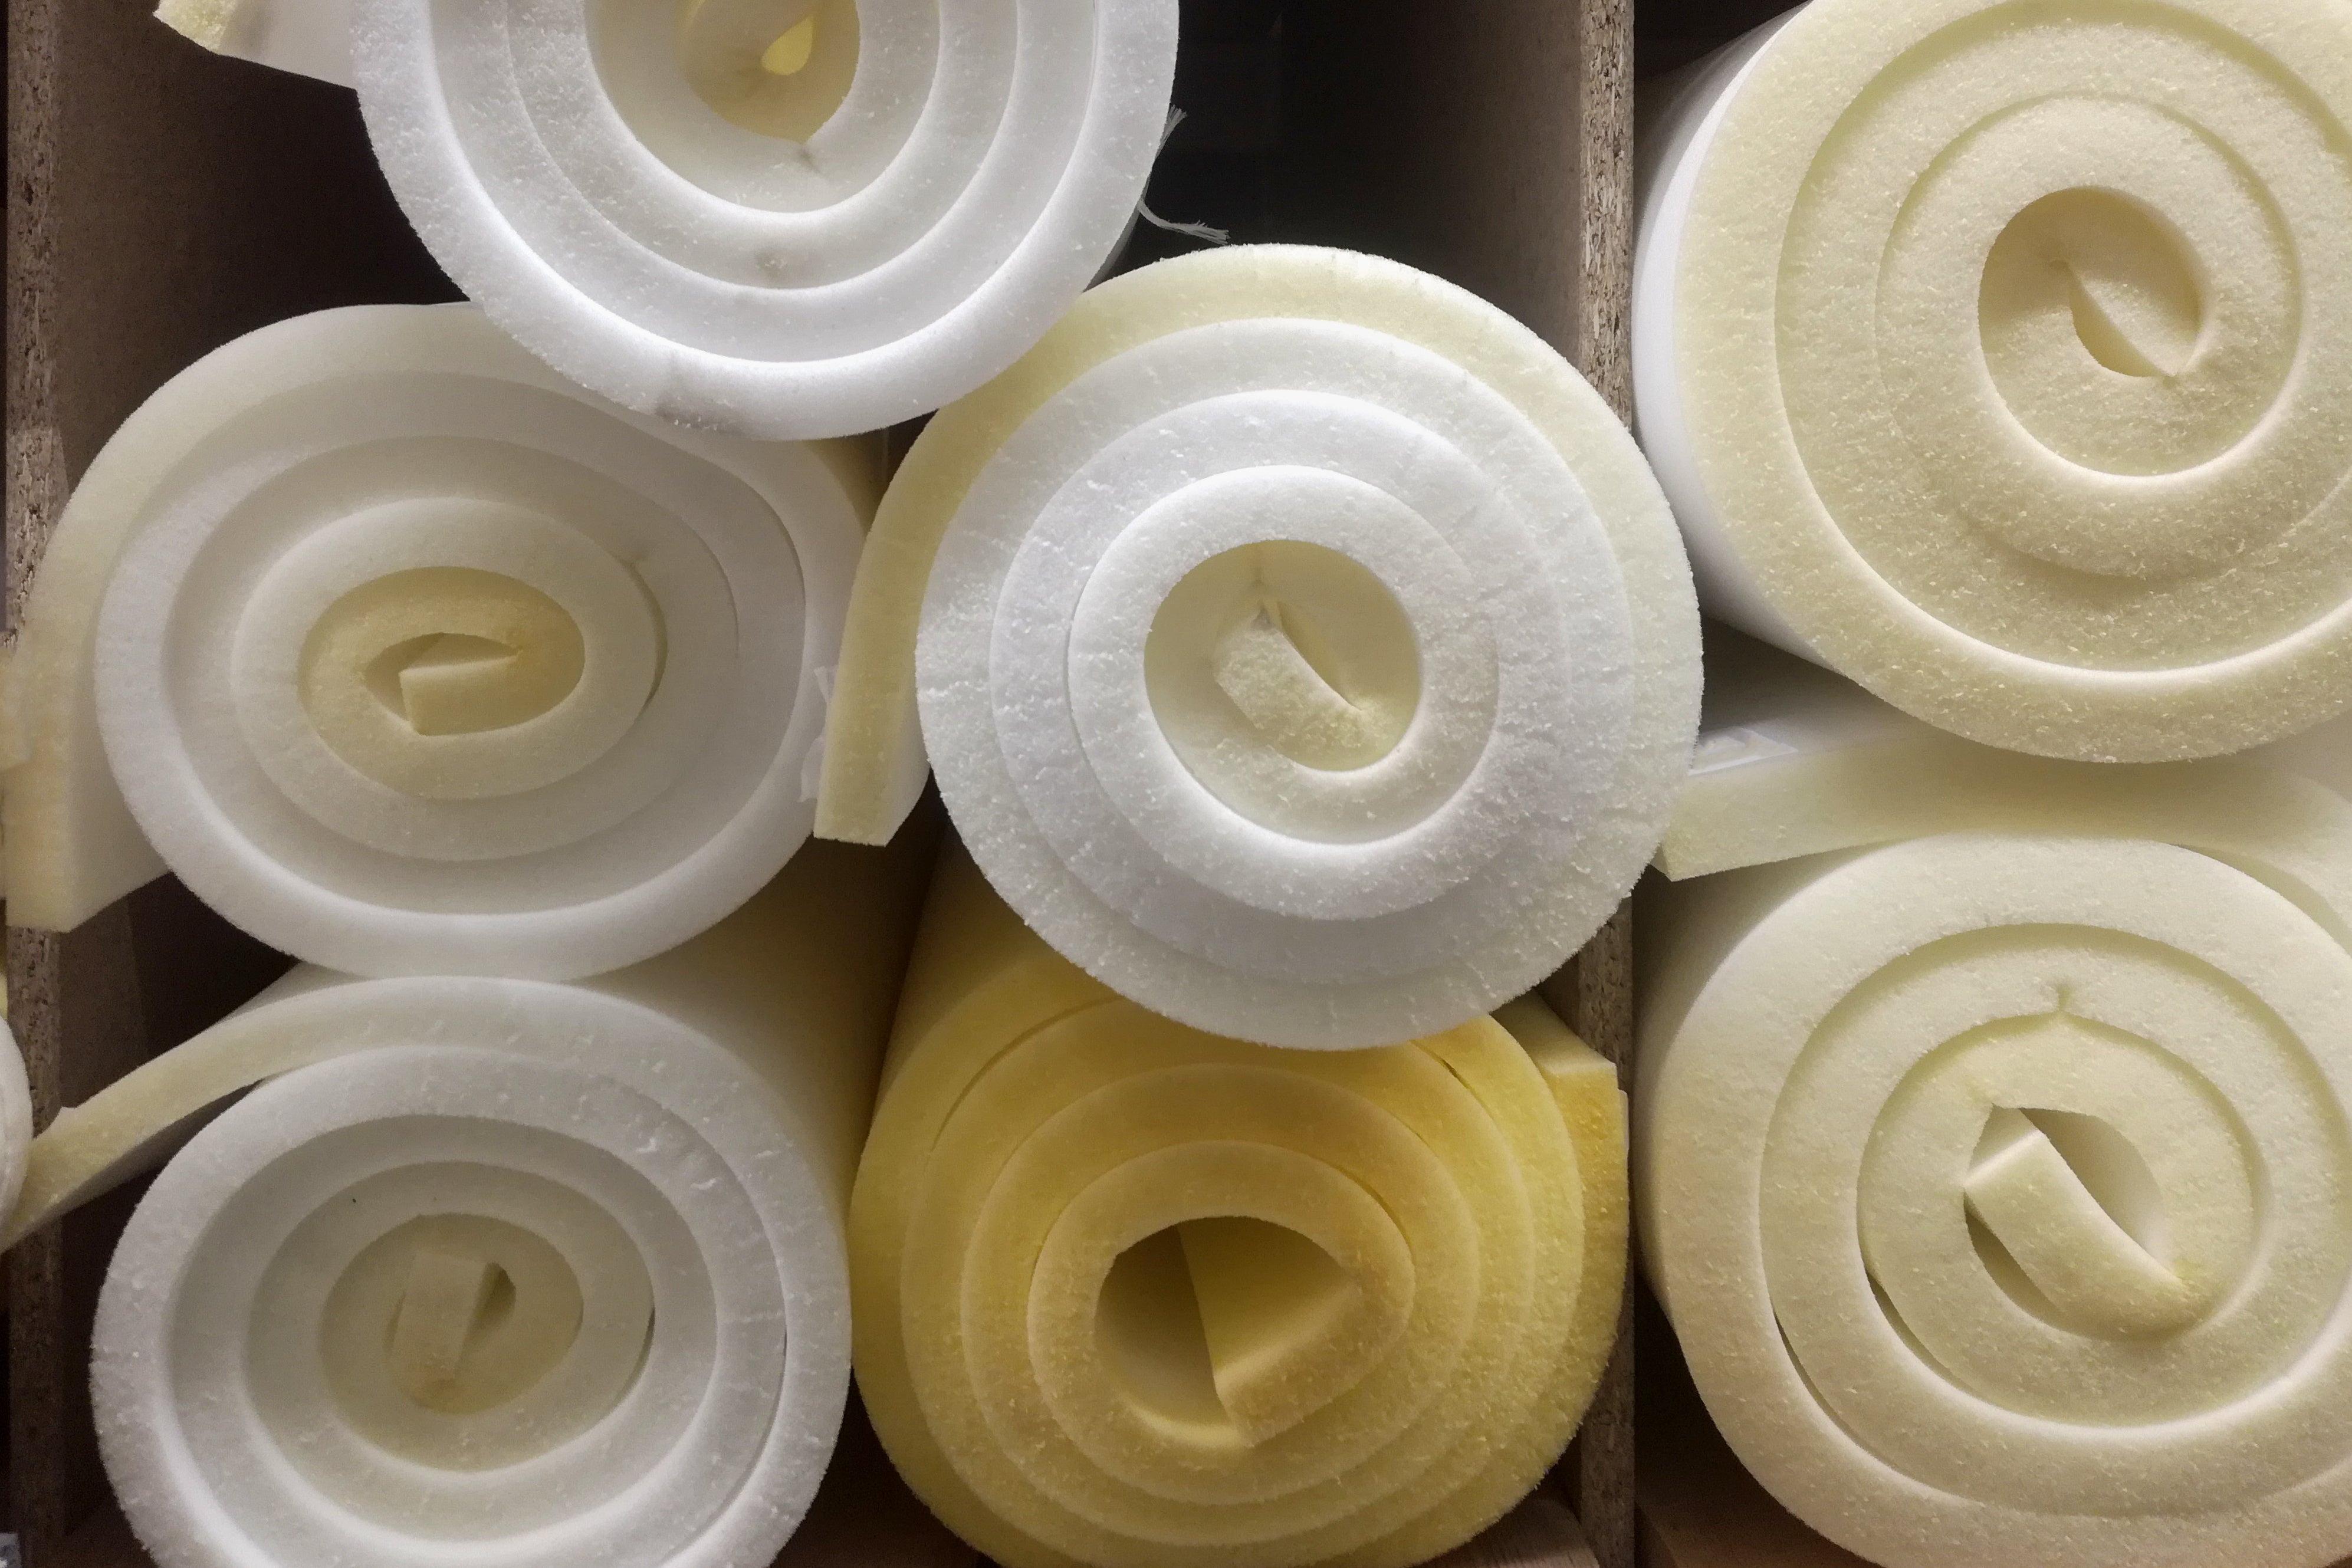 2 Medium Upholstery Foam Sheet 80x24x2 - Fabric Farms